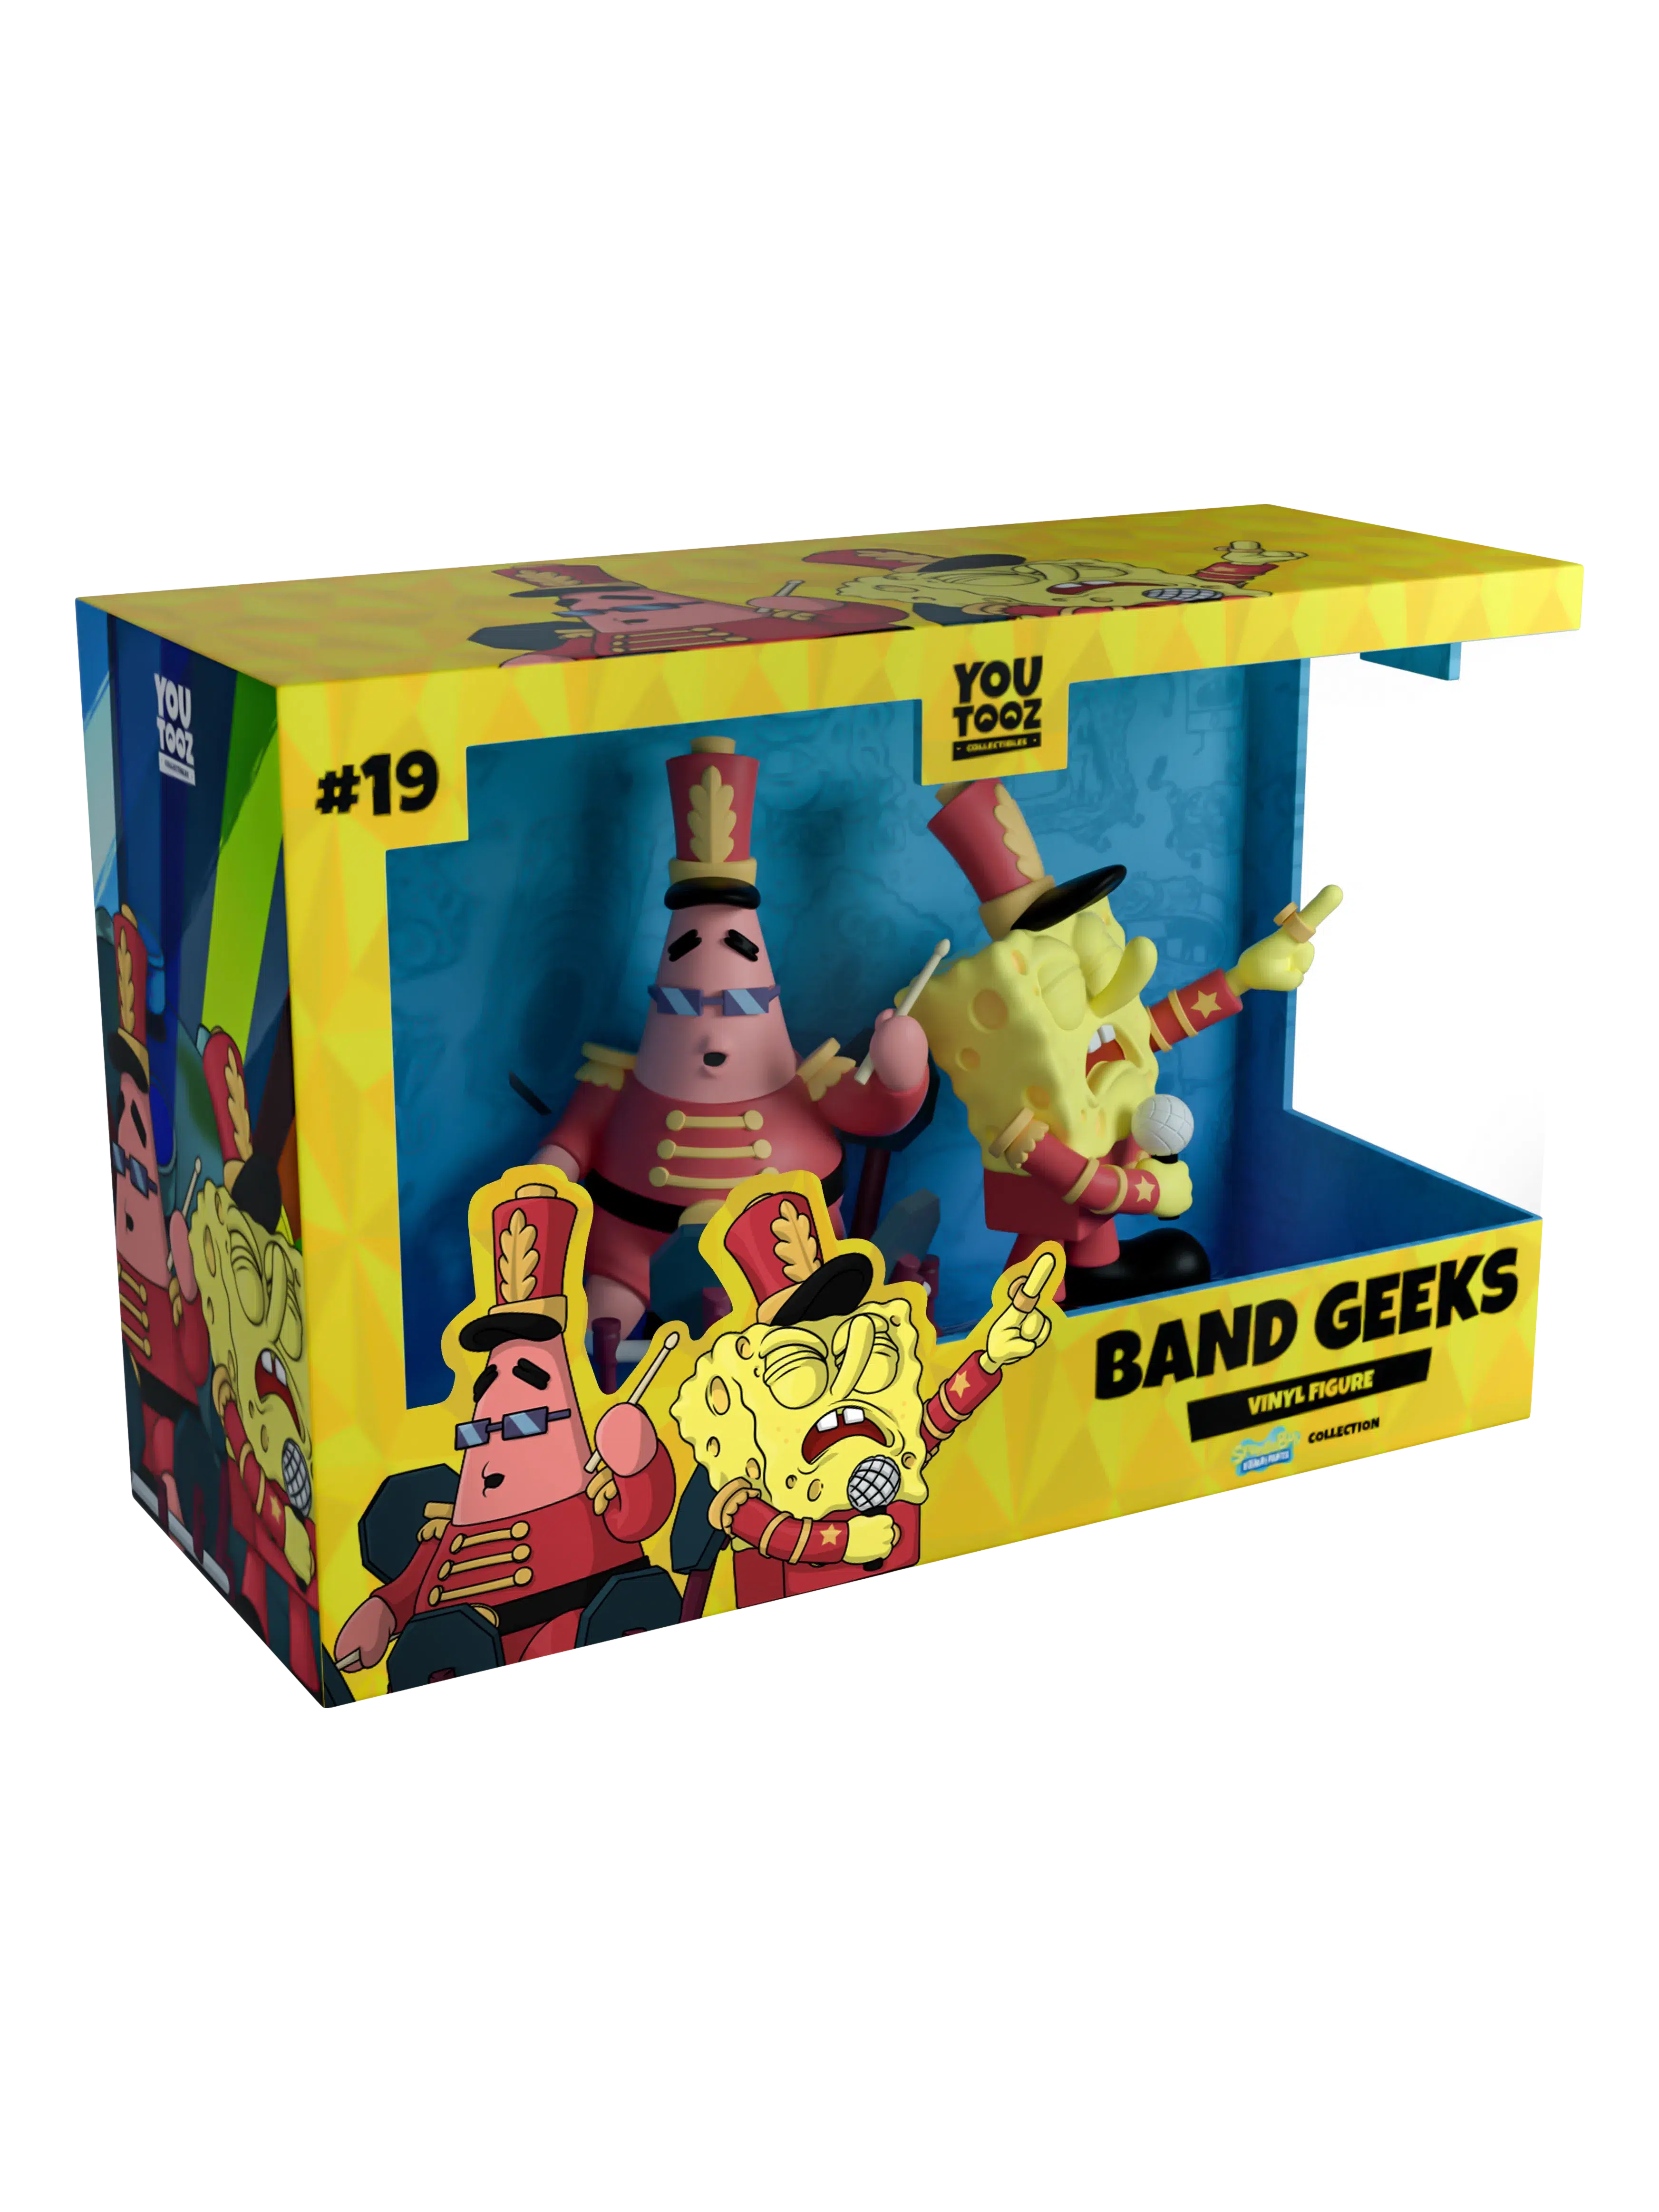 Spongebob Squarepants: Band Geeks: #19: YouTooz